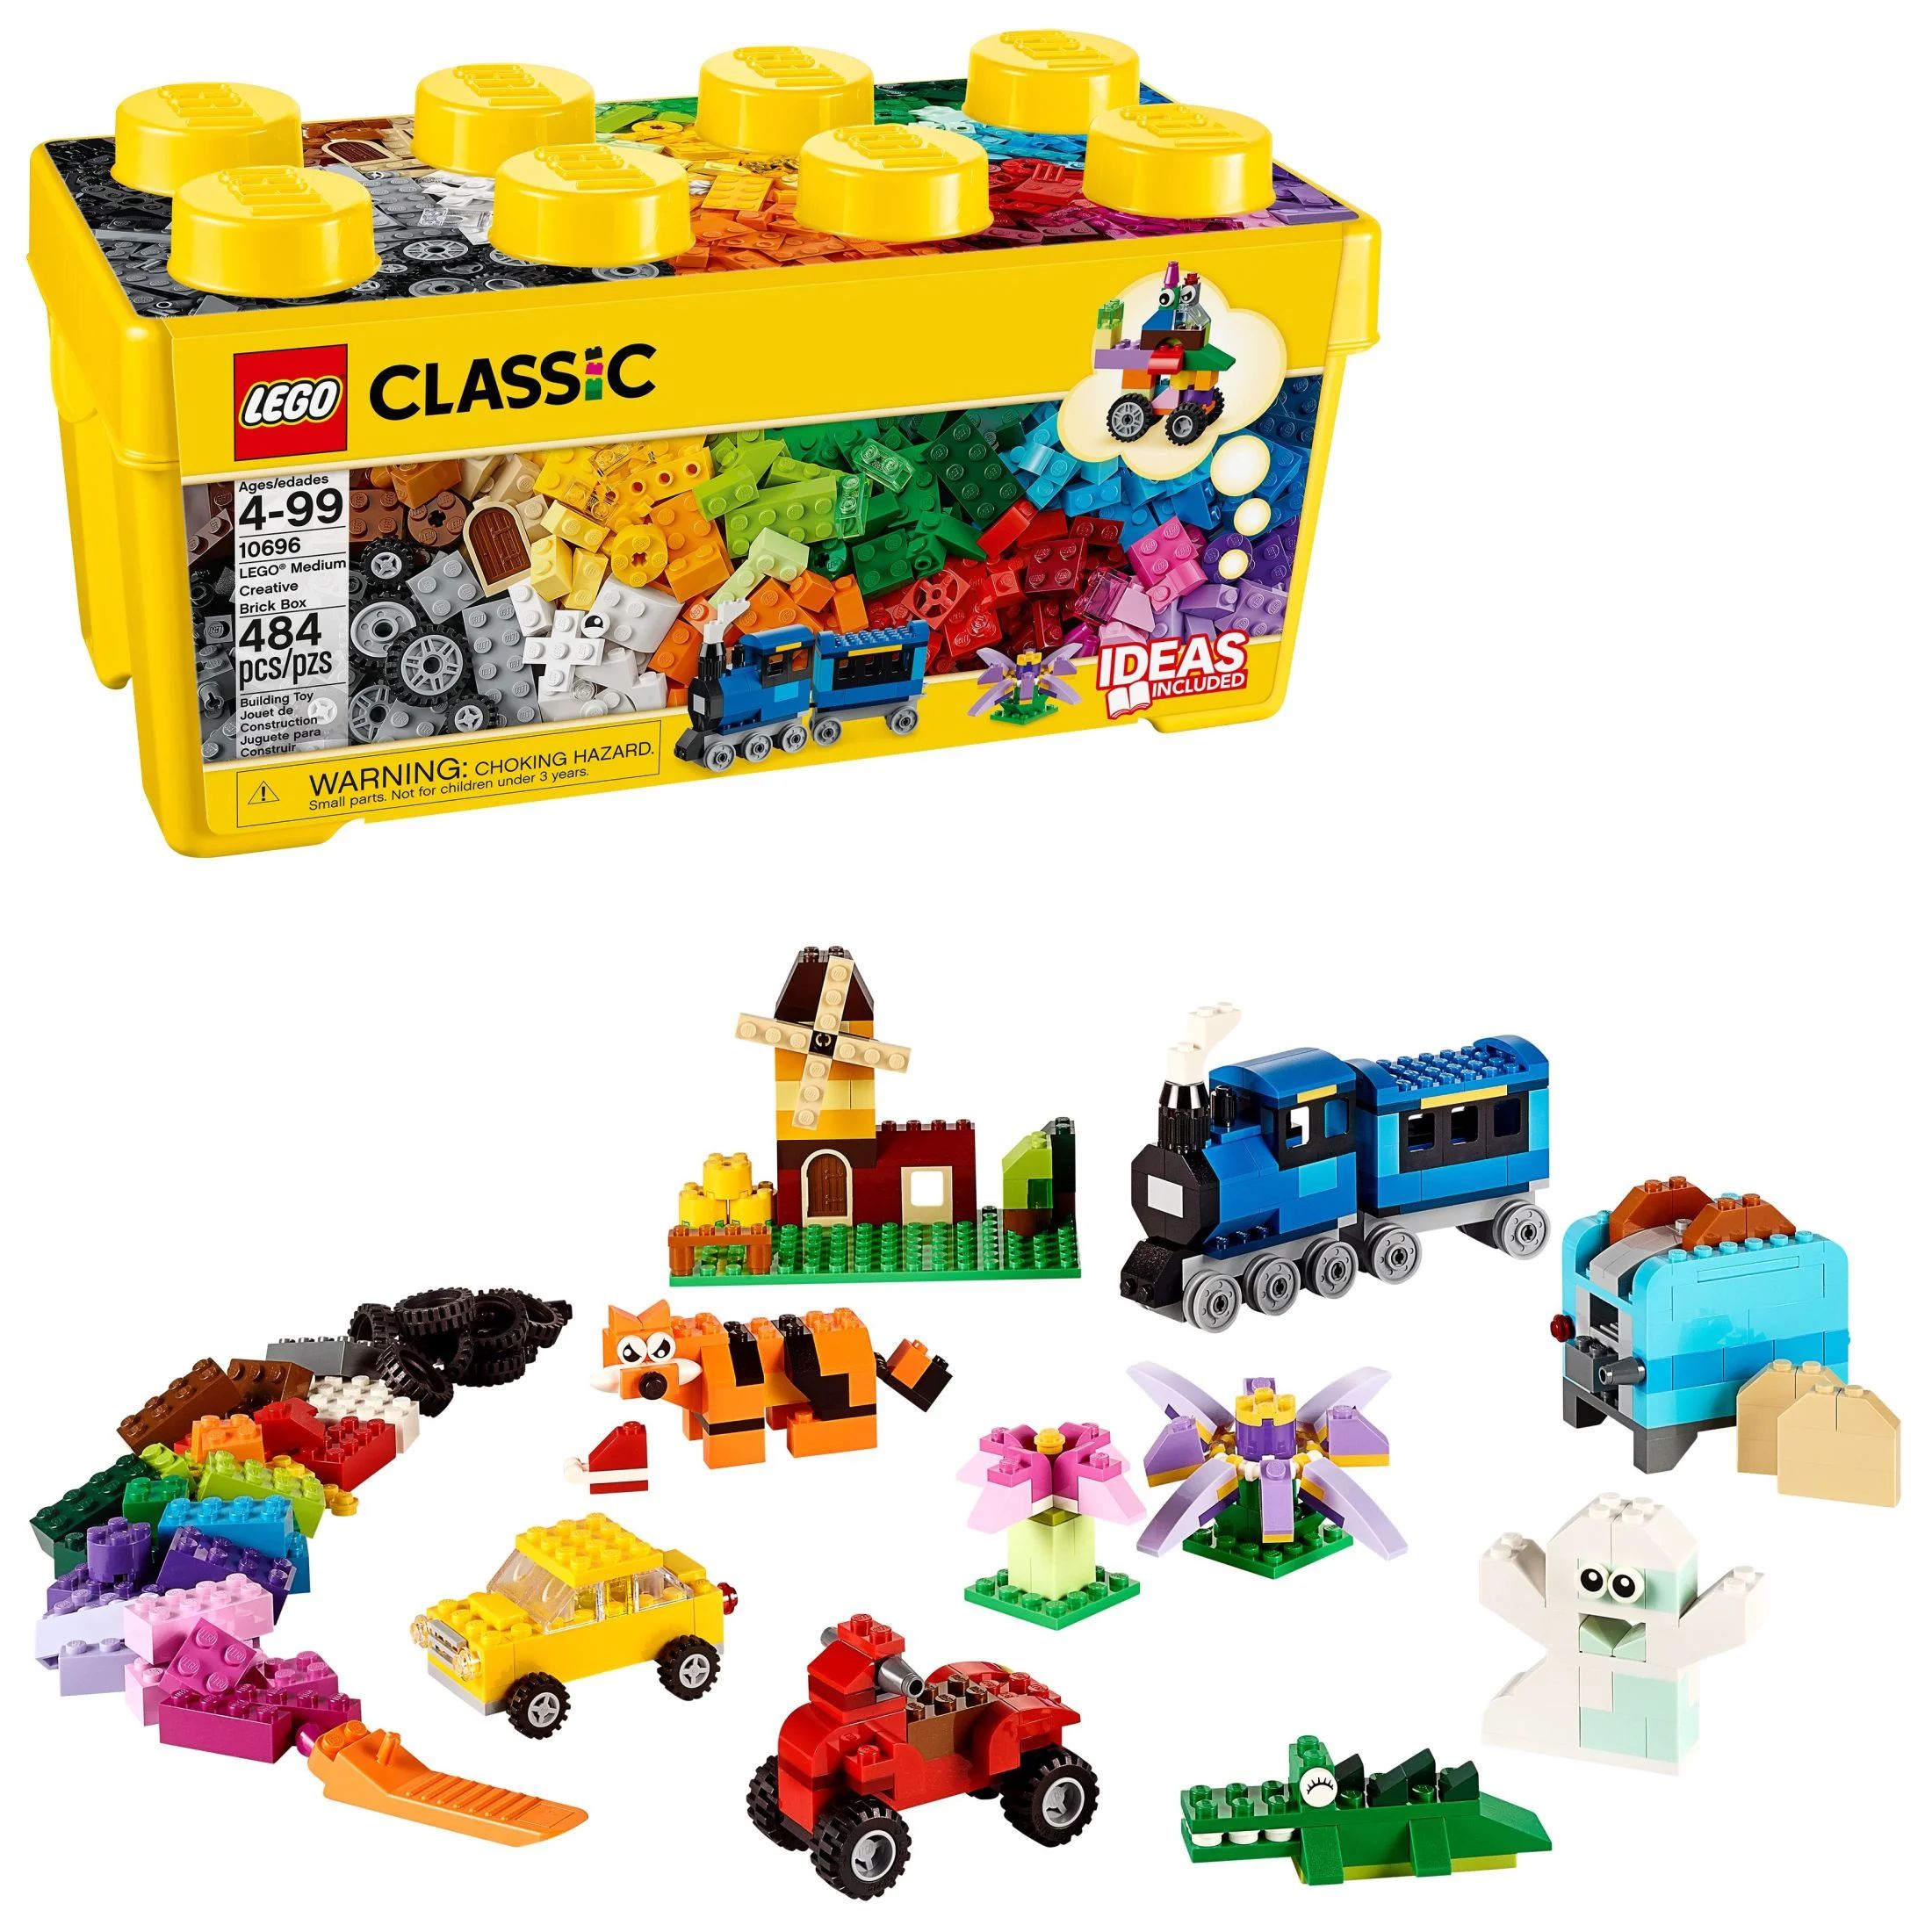 LEGO Classic Medium Creative Brick Box 10696 Building Toy Set with Storage, Includes Train, Car, ... | Walmart (US)